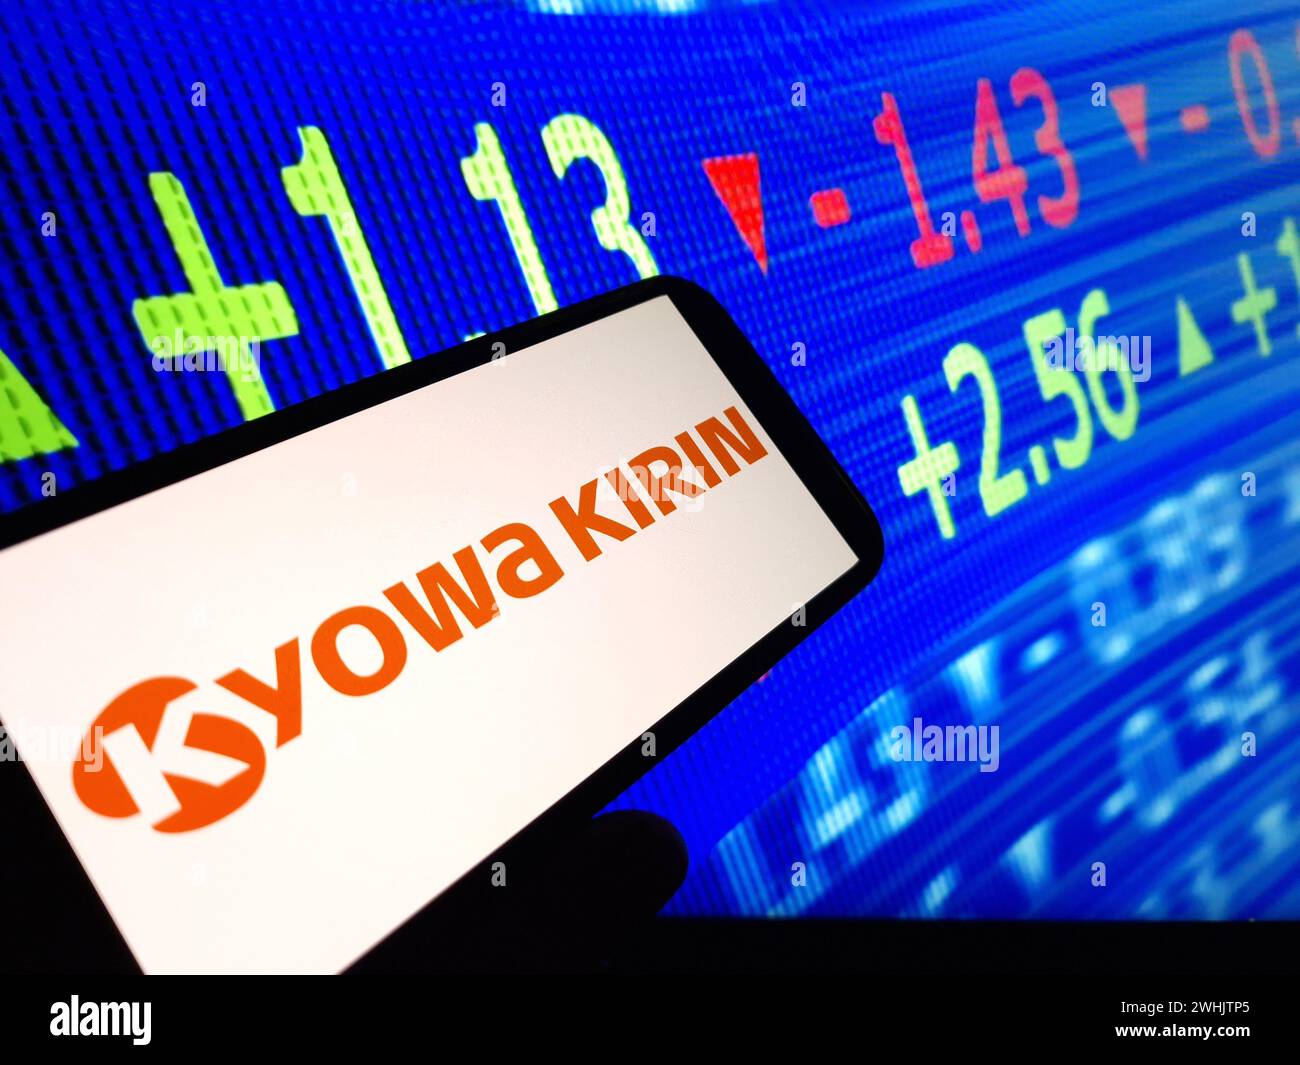 Konskie, Poland - February 09, 2024: Kyowa Kirin Co Ltd company logo displayed on mobile phone Stock Photo